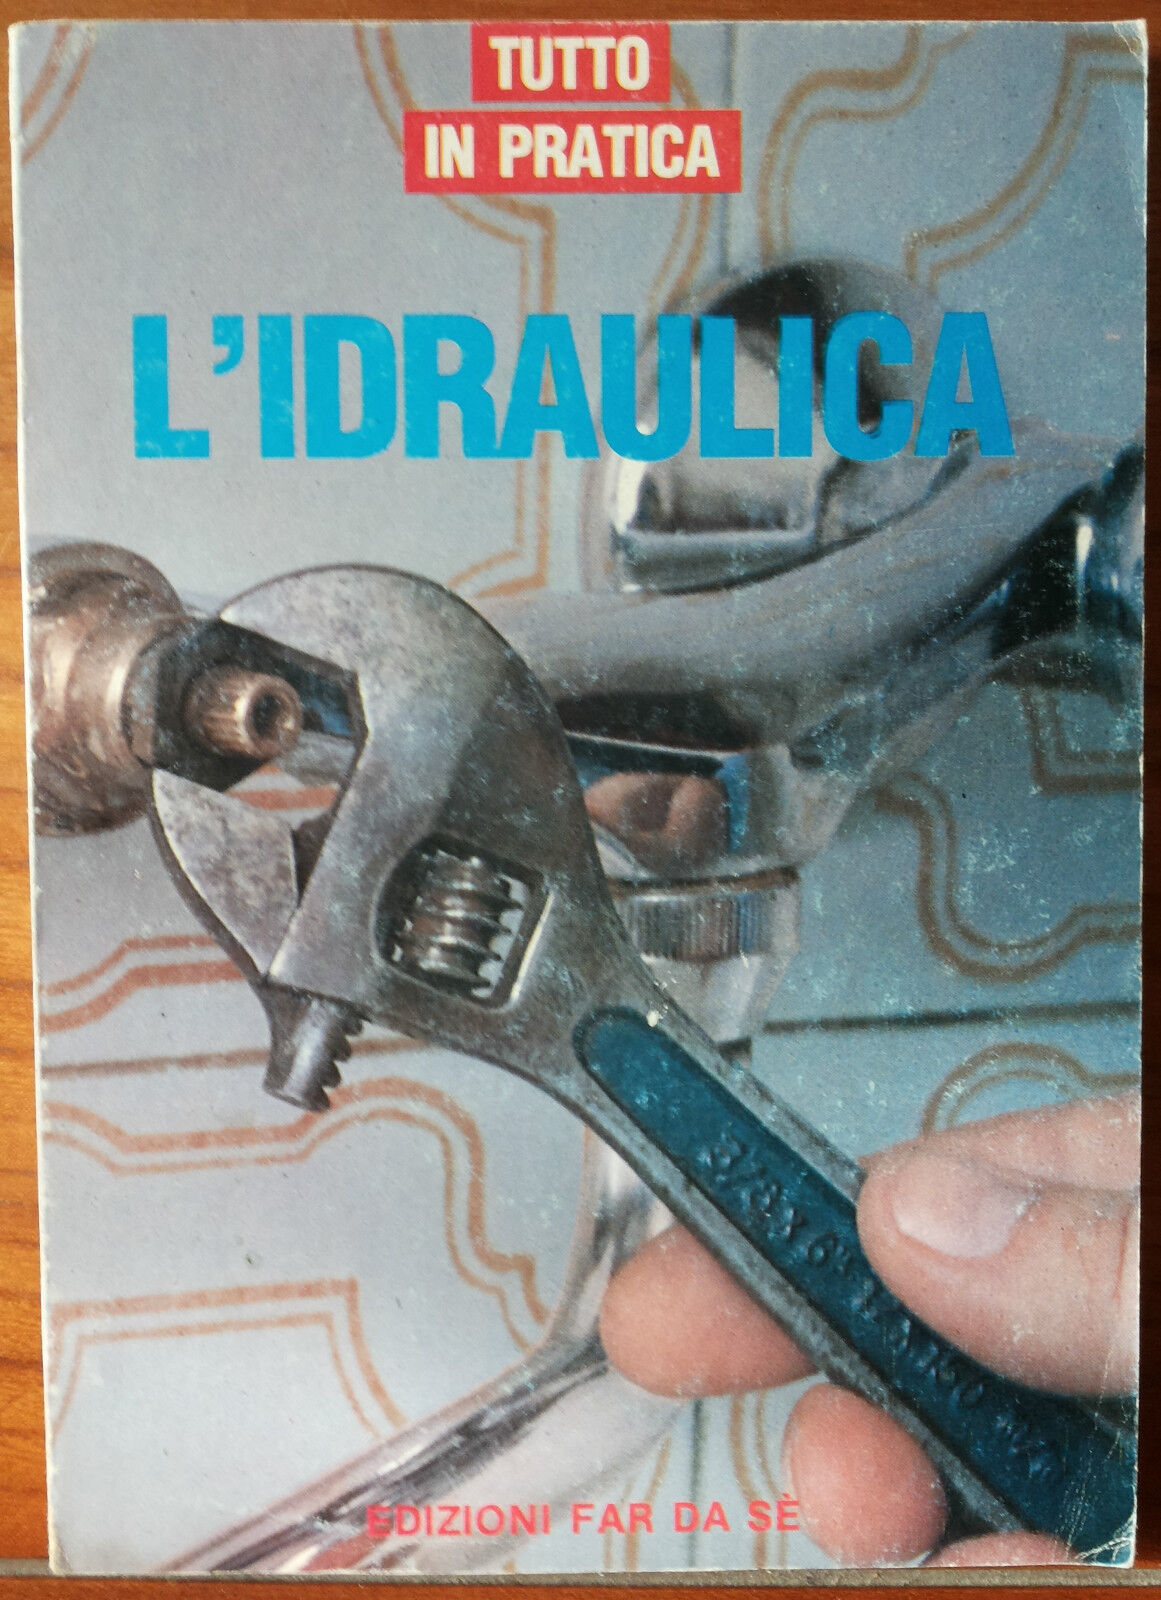 L'idraulica - AA.VV. - Edizioni Far da s?,1991 - R